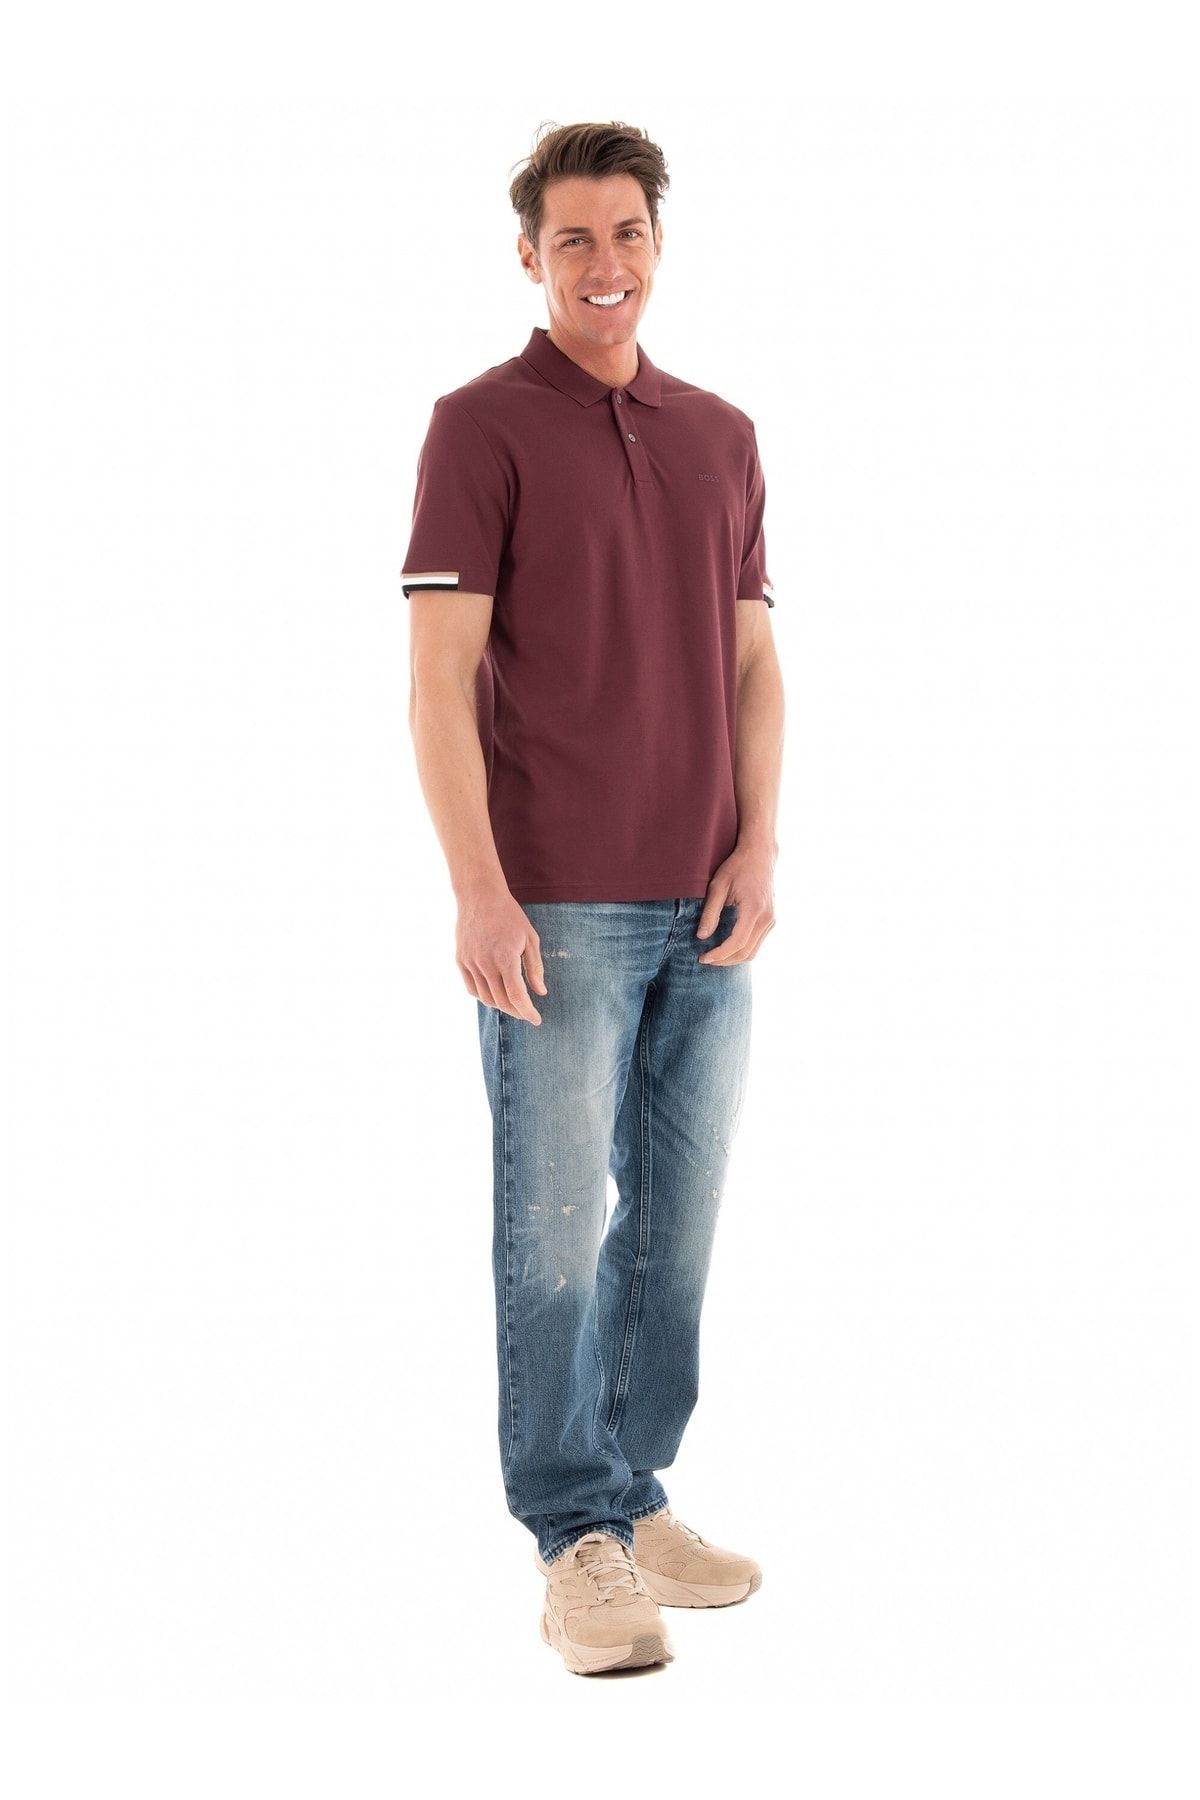 BOSS تی شرت مردانه آستین کوتاه با یقه قرمز ساده تناسب معمولی 50467113-601